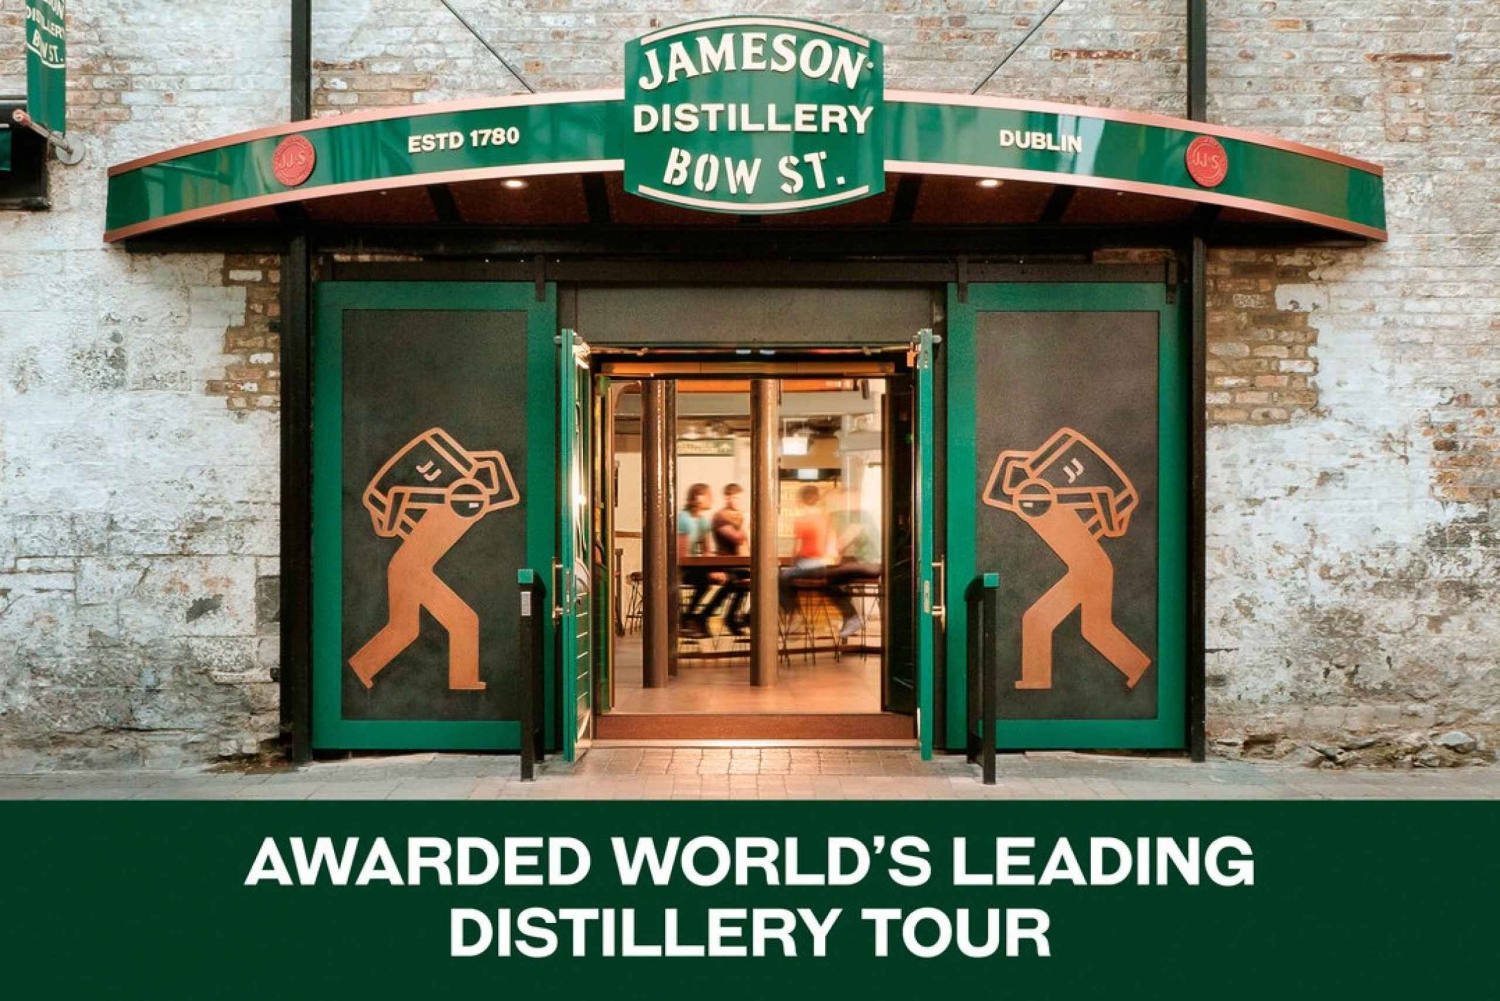 Dublin: Destilaria de uísque Jameson e passeio de ônibus hop-on hop-off